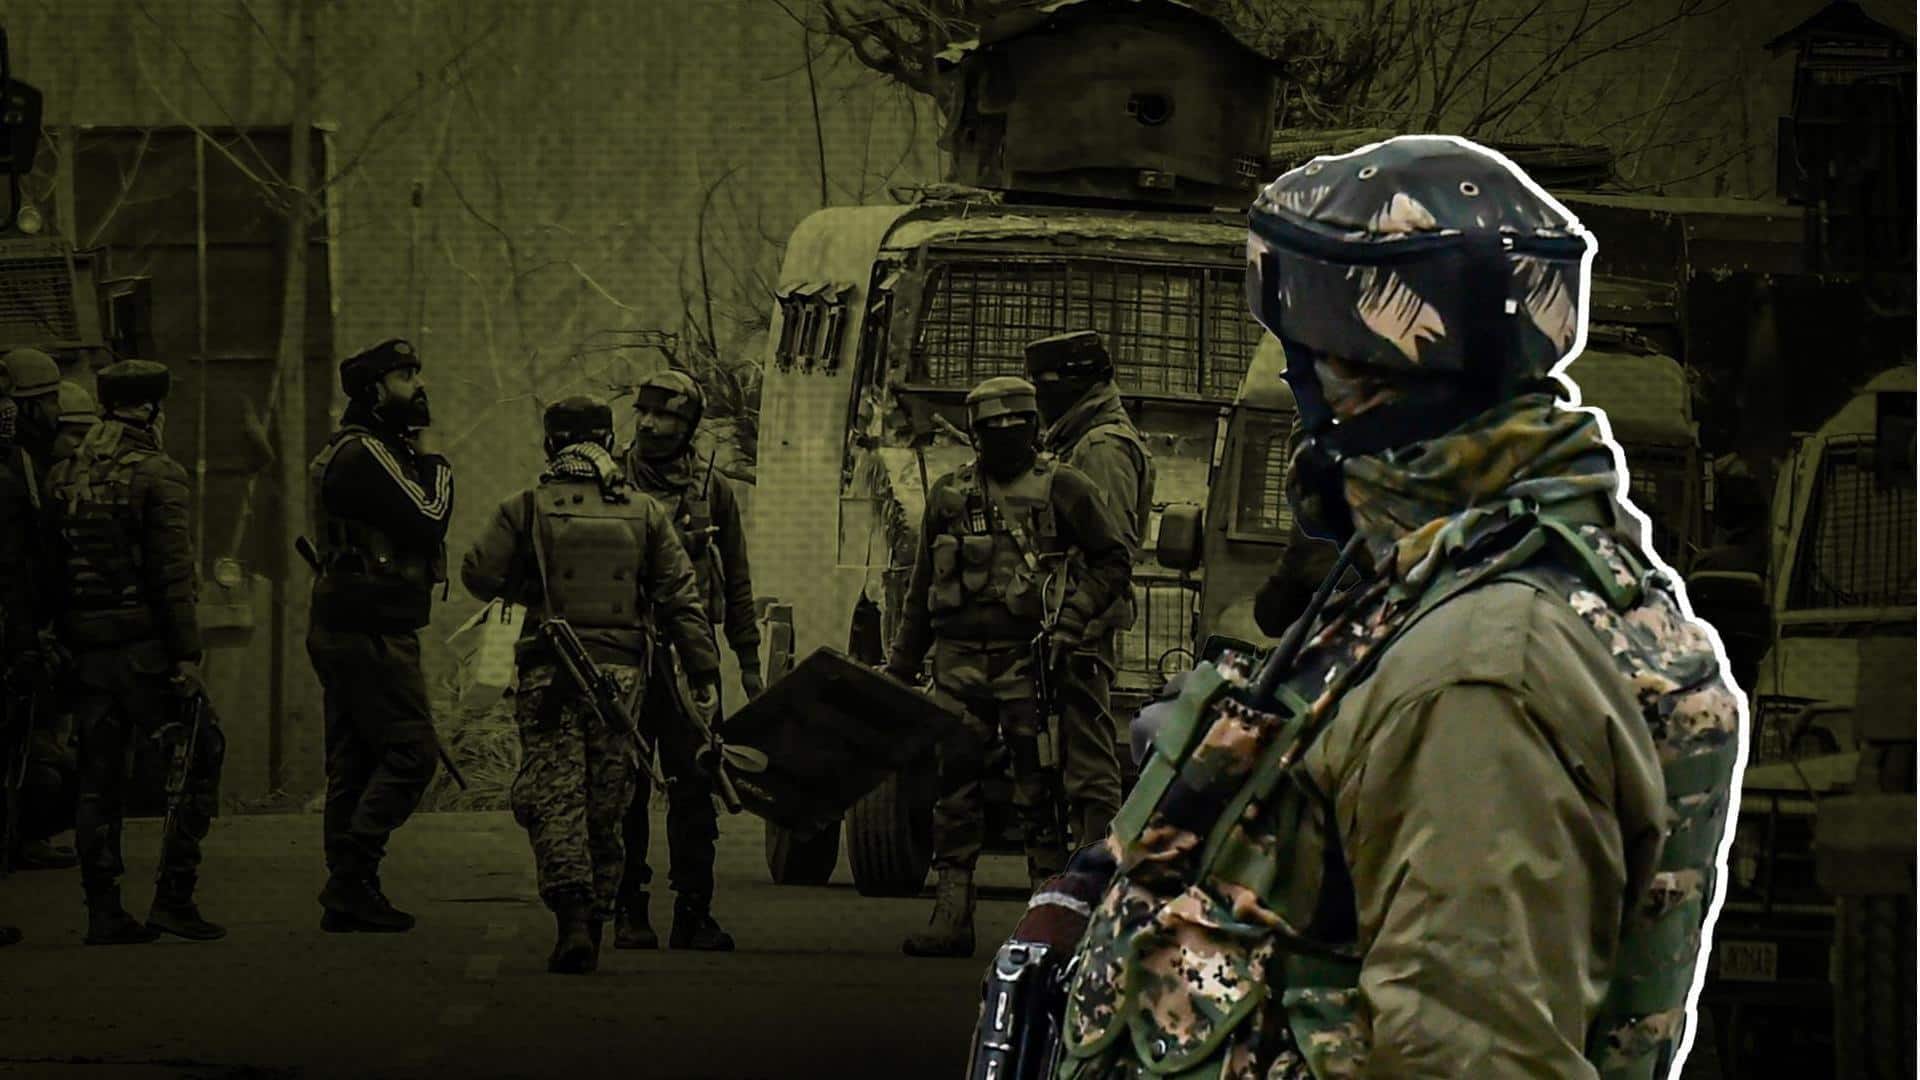 J&K: Encounter breaks out in Anantnag between terrorists, security personnel